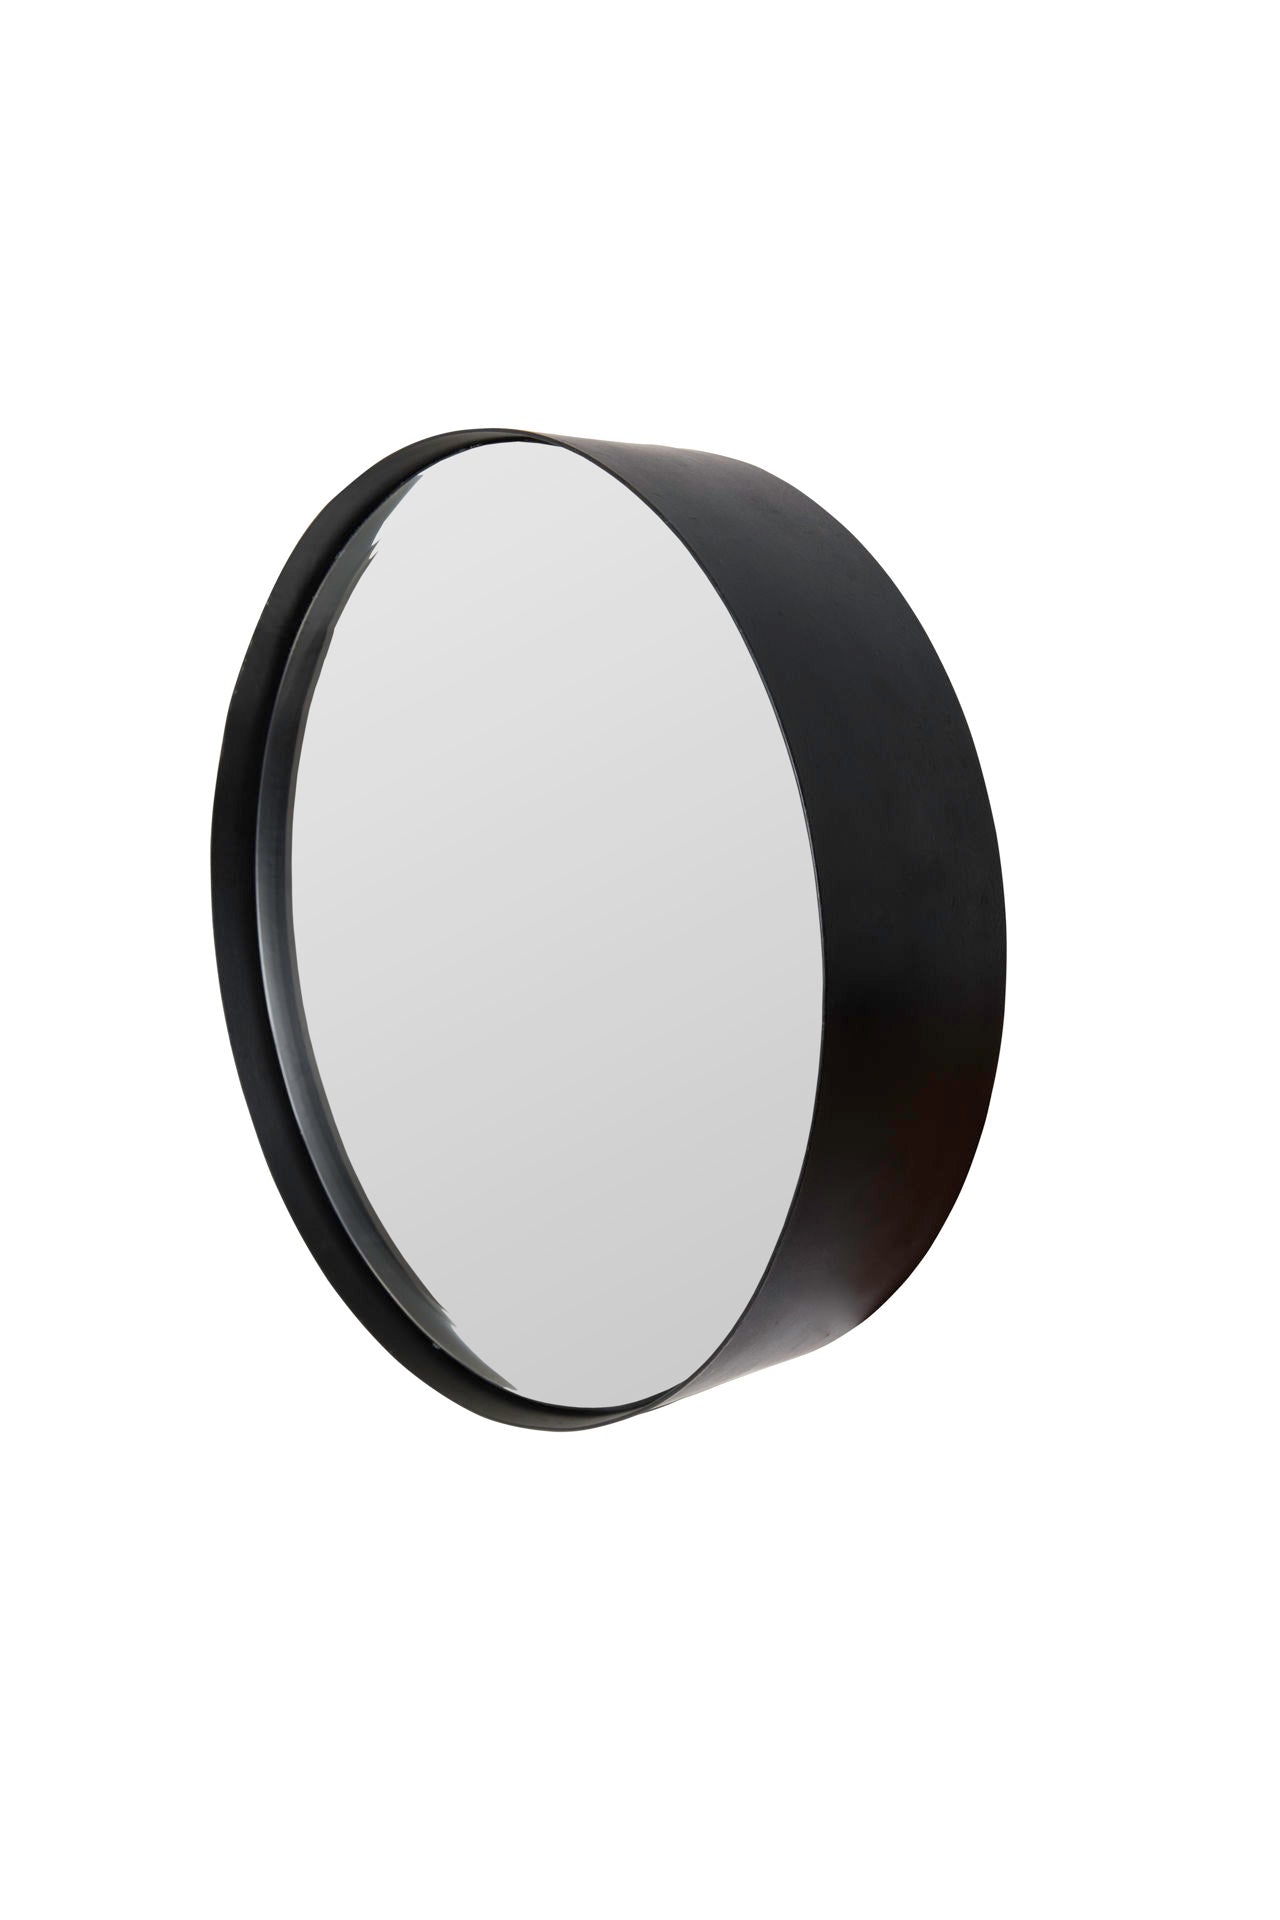 Nancy's Timonium Mirror - Modern - Black - Glass, Steel - 36 cm x 36 cm x 7.5 cm